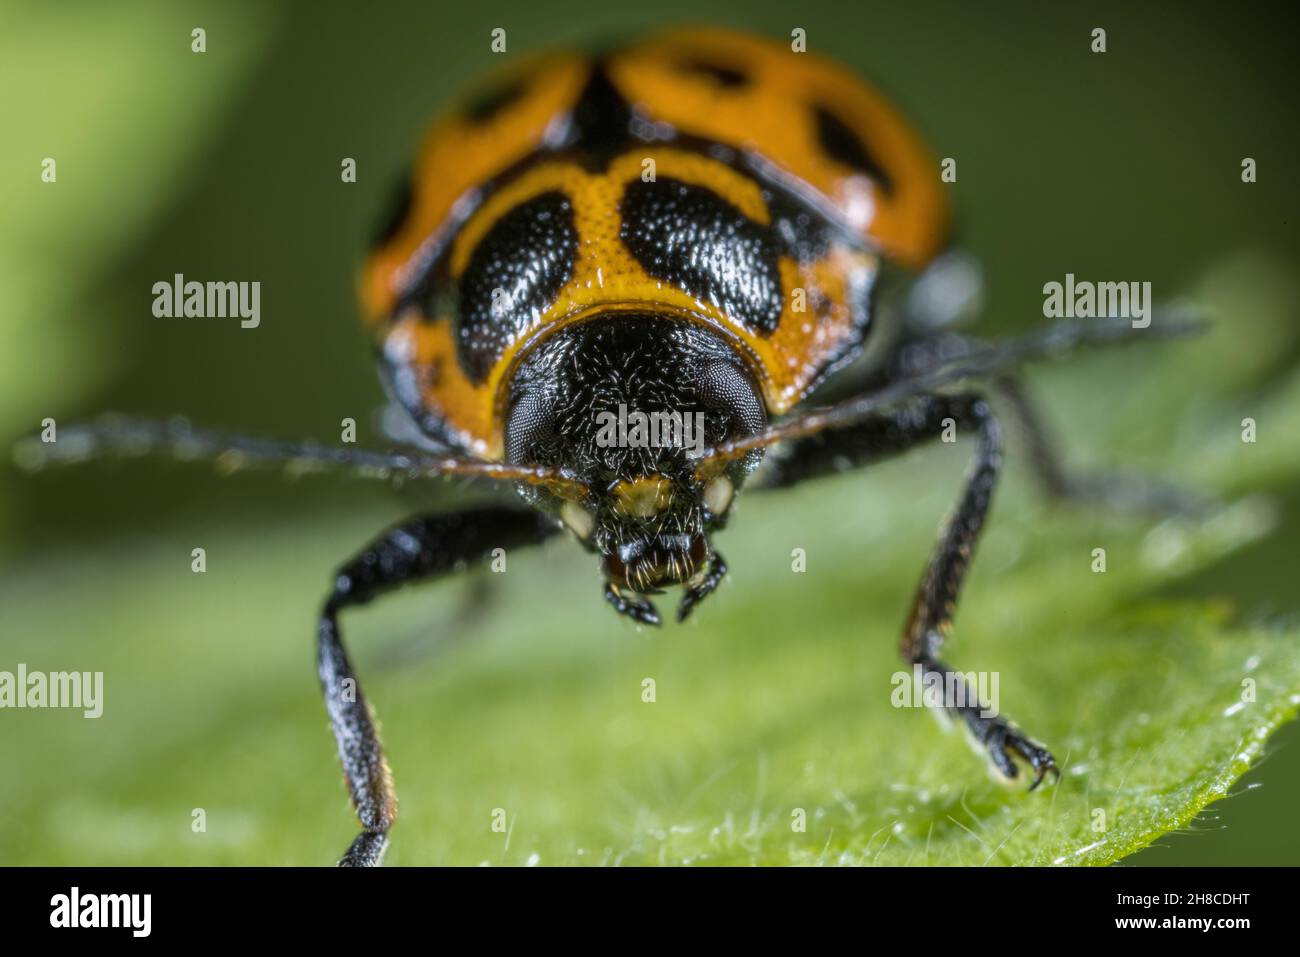 Leaf beetle (Cryptocephalus quinquepunctatus), front view, Germany Stock Photo